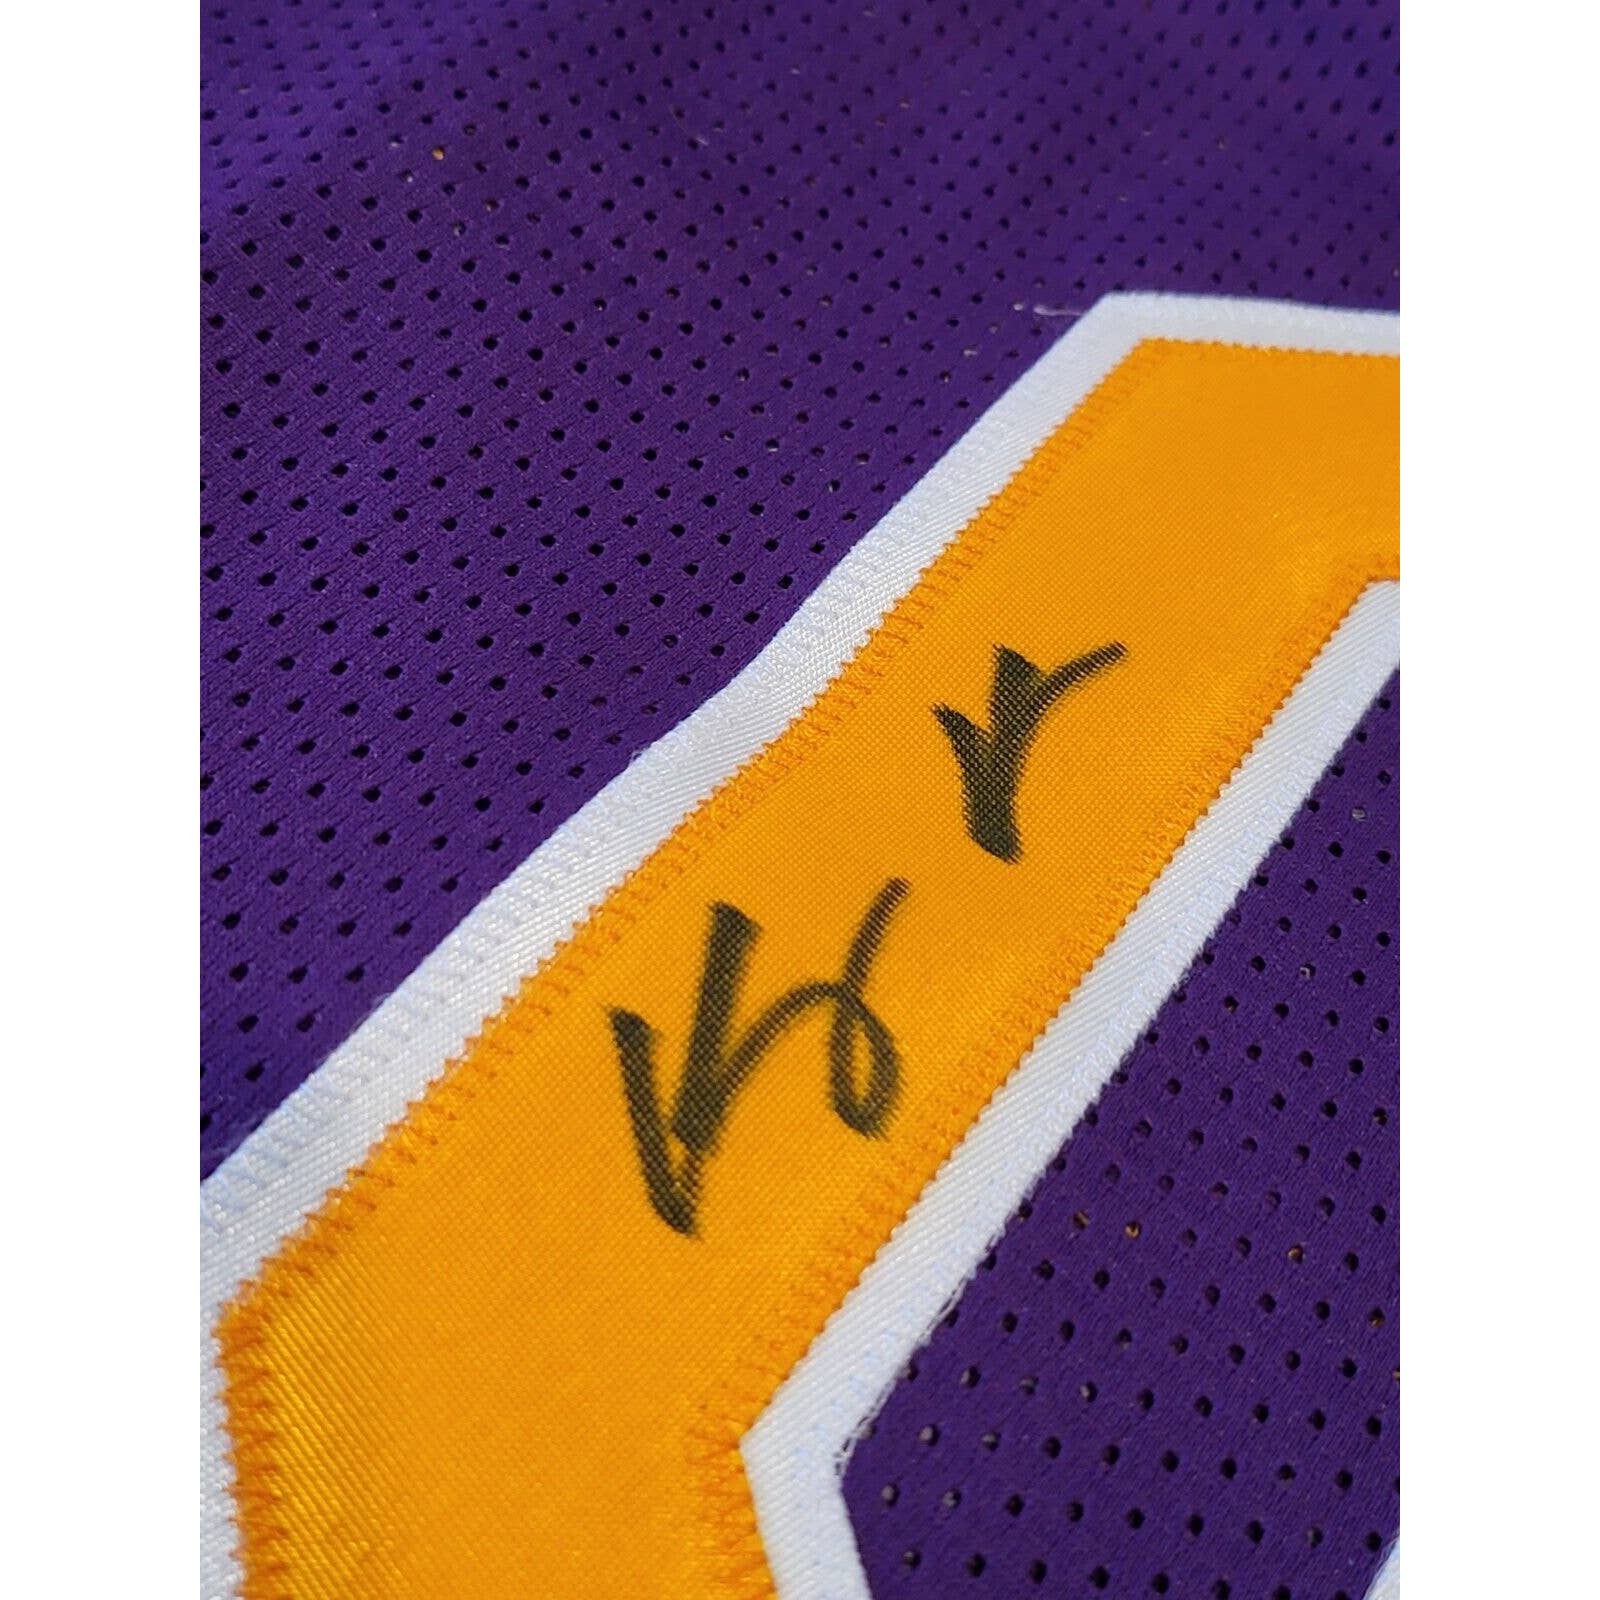 Kyle Kuzma Autographed/Signed Jersey Beckett COA Los Angeles Lakers LA - TreasuresEvolved